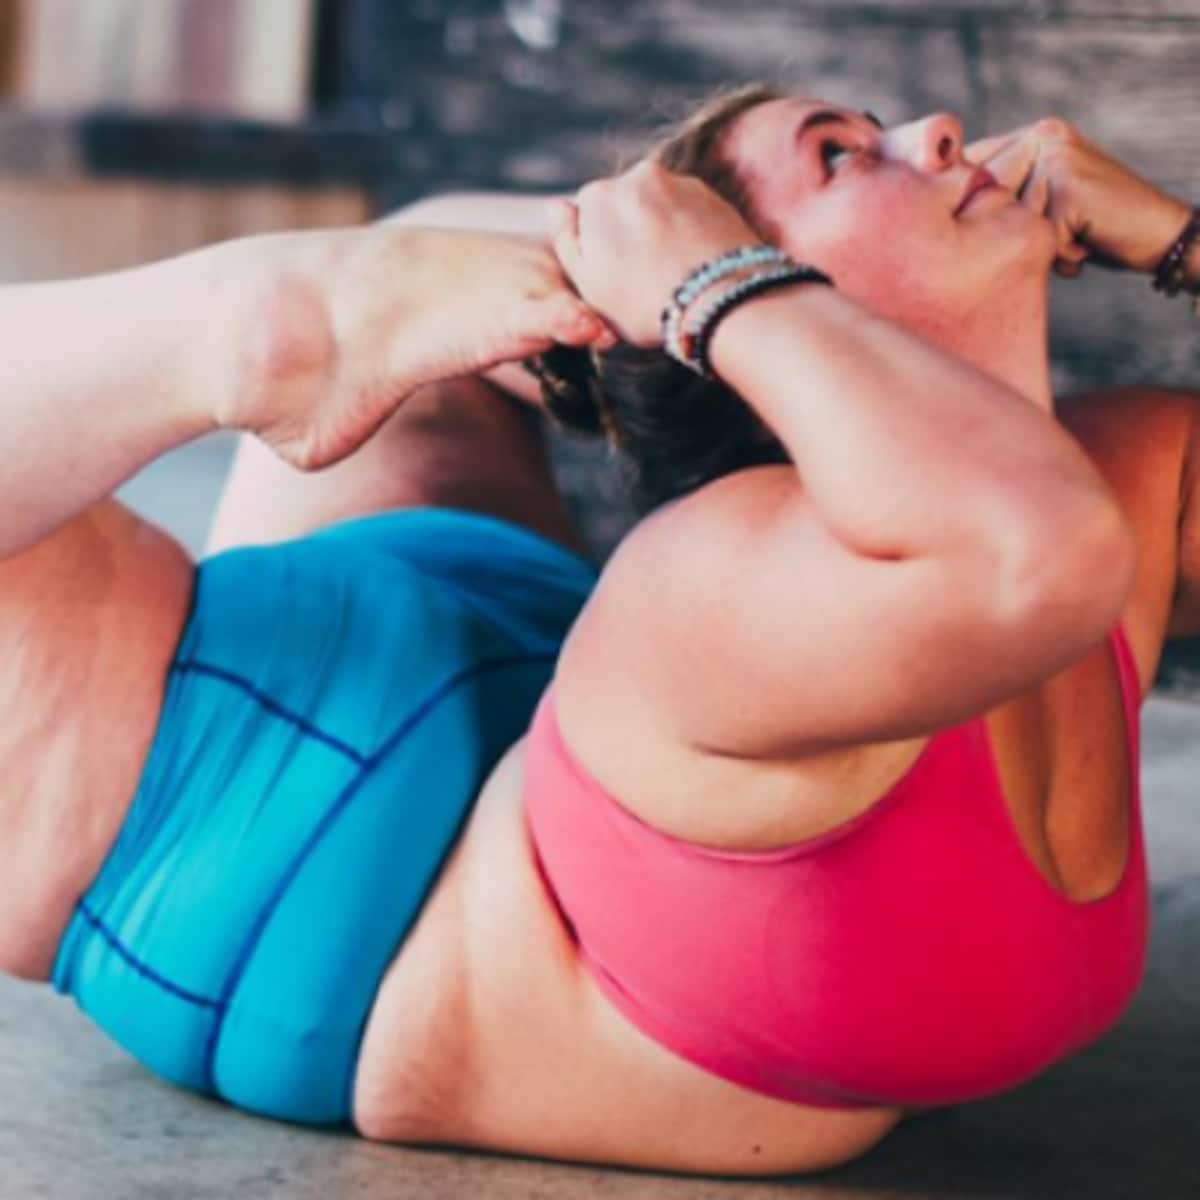 Dana Falsetti, de yogalerares die élke vrouw het yogamatje op wil